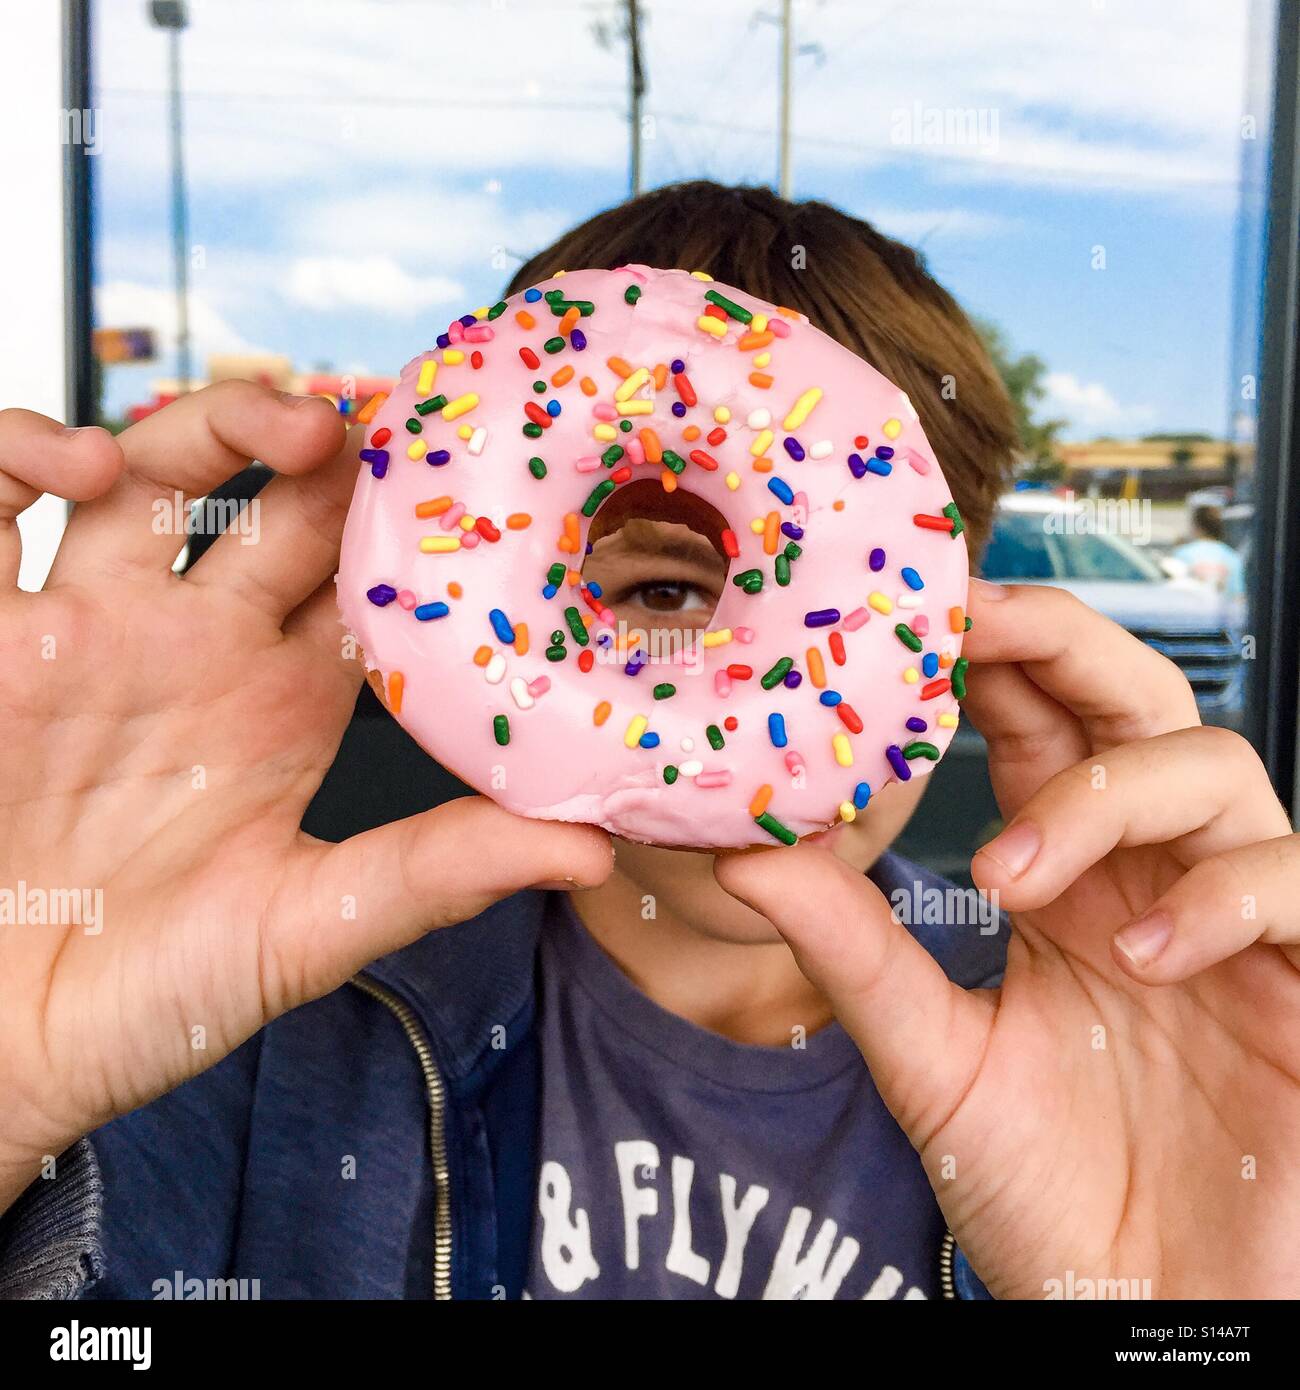 Boy peeping through the Donut's hole Stock Photo